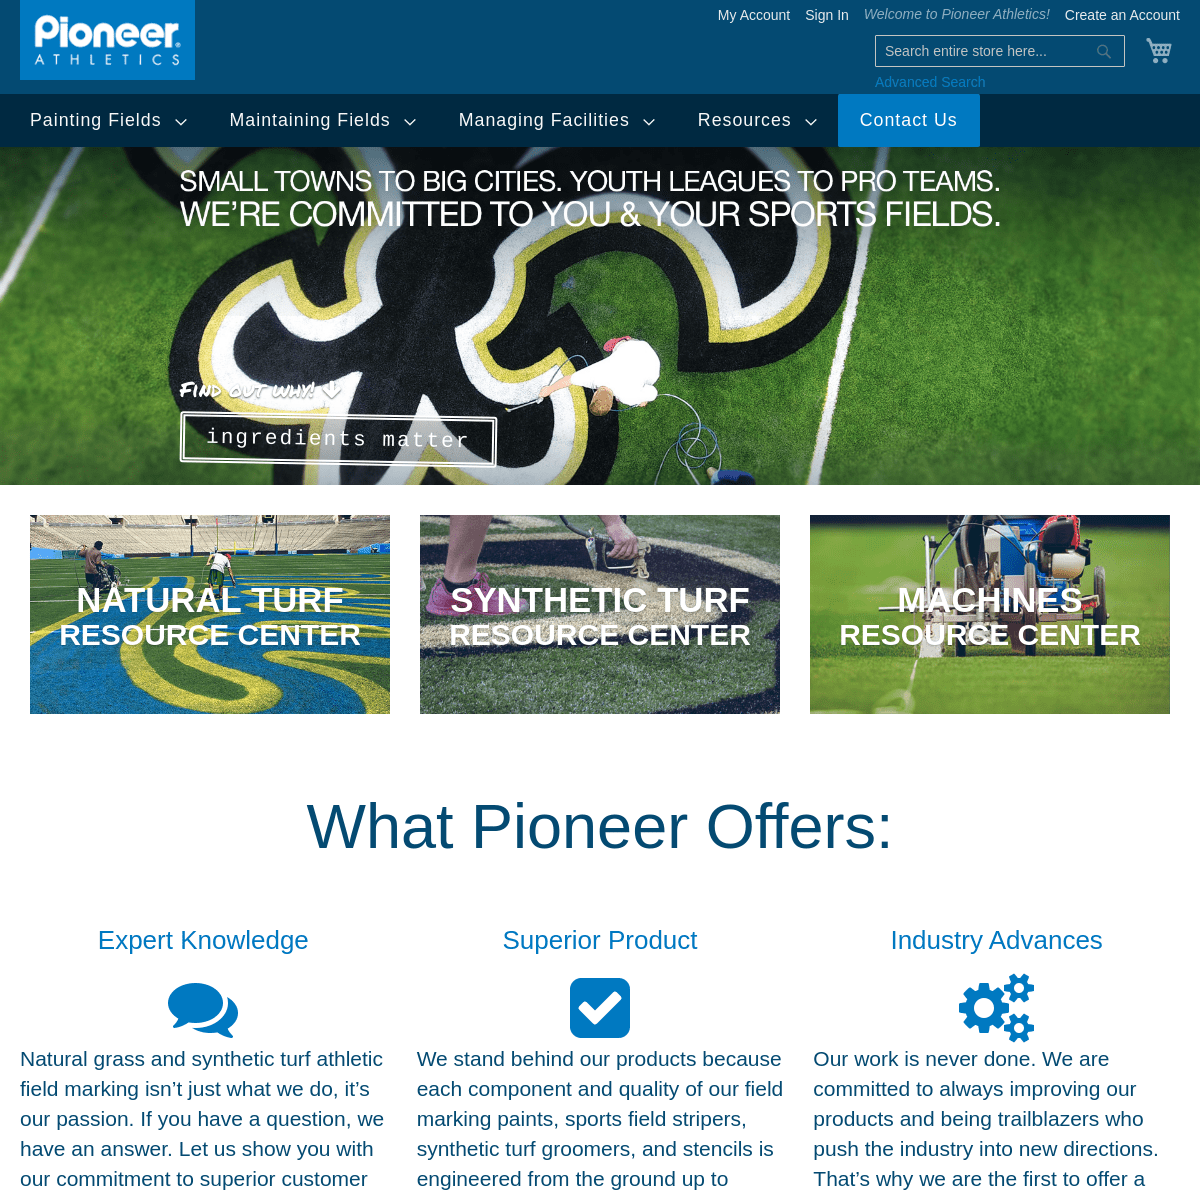 A complete backup of pioneerathletics.com